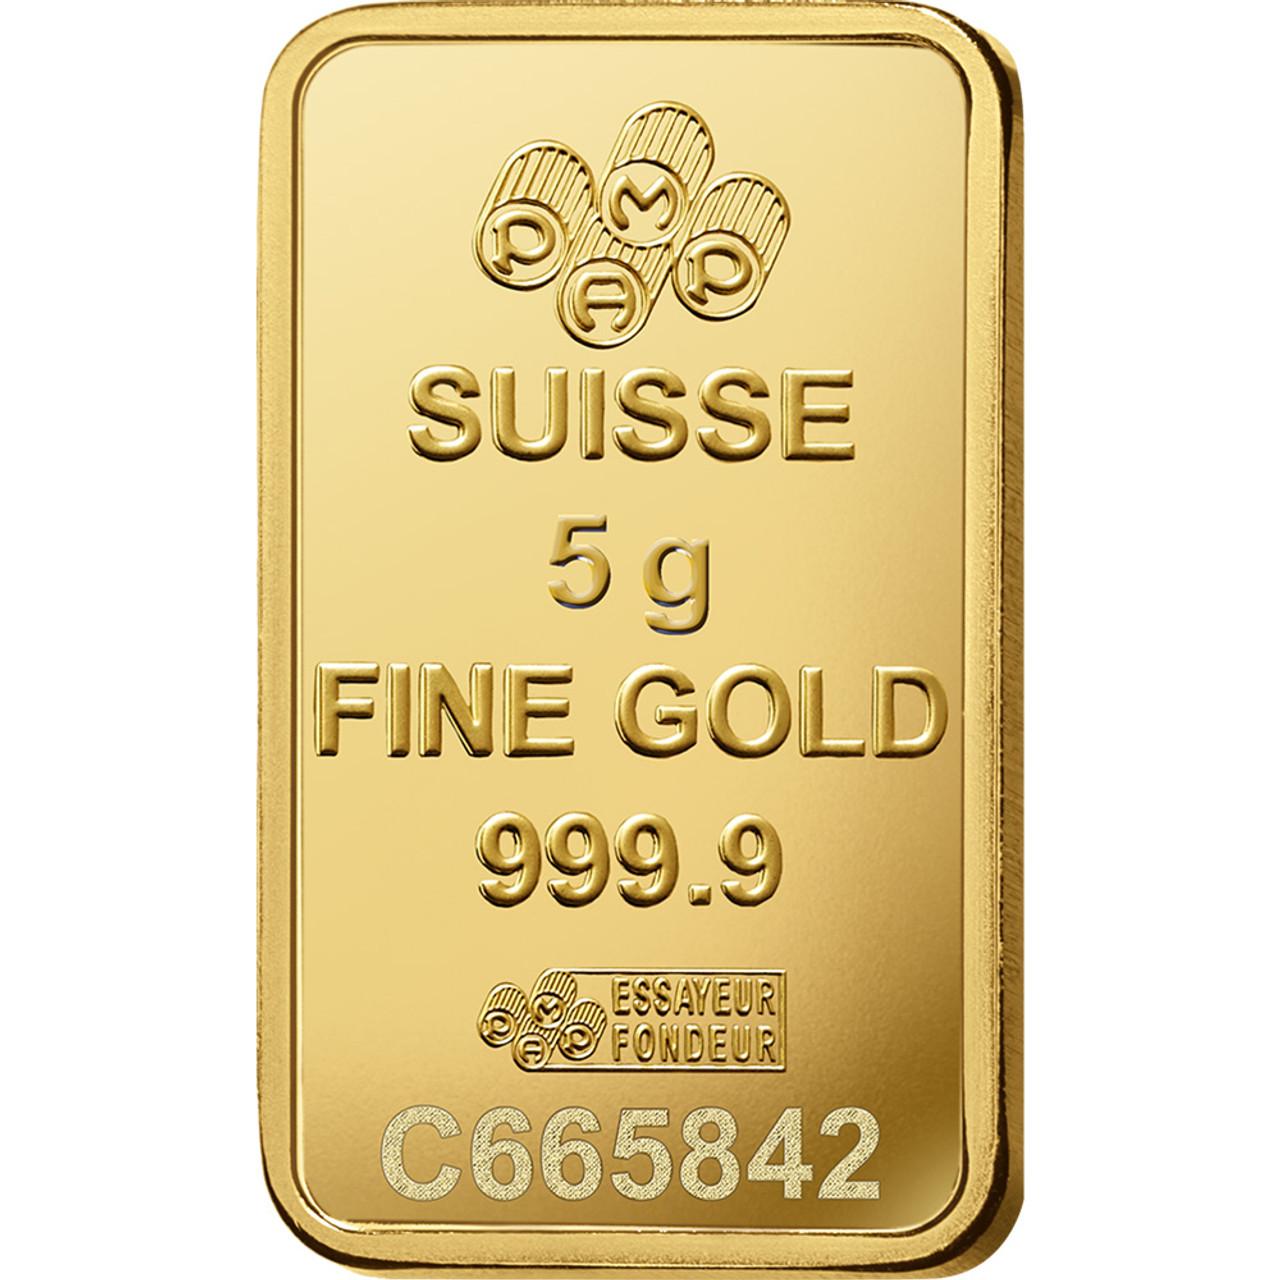 credit suisse 5g fine gold 999.9 pendant